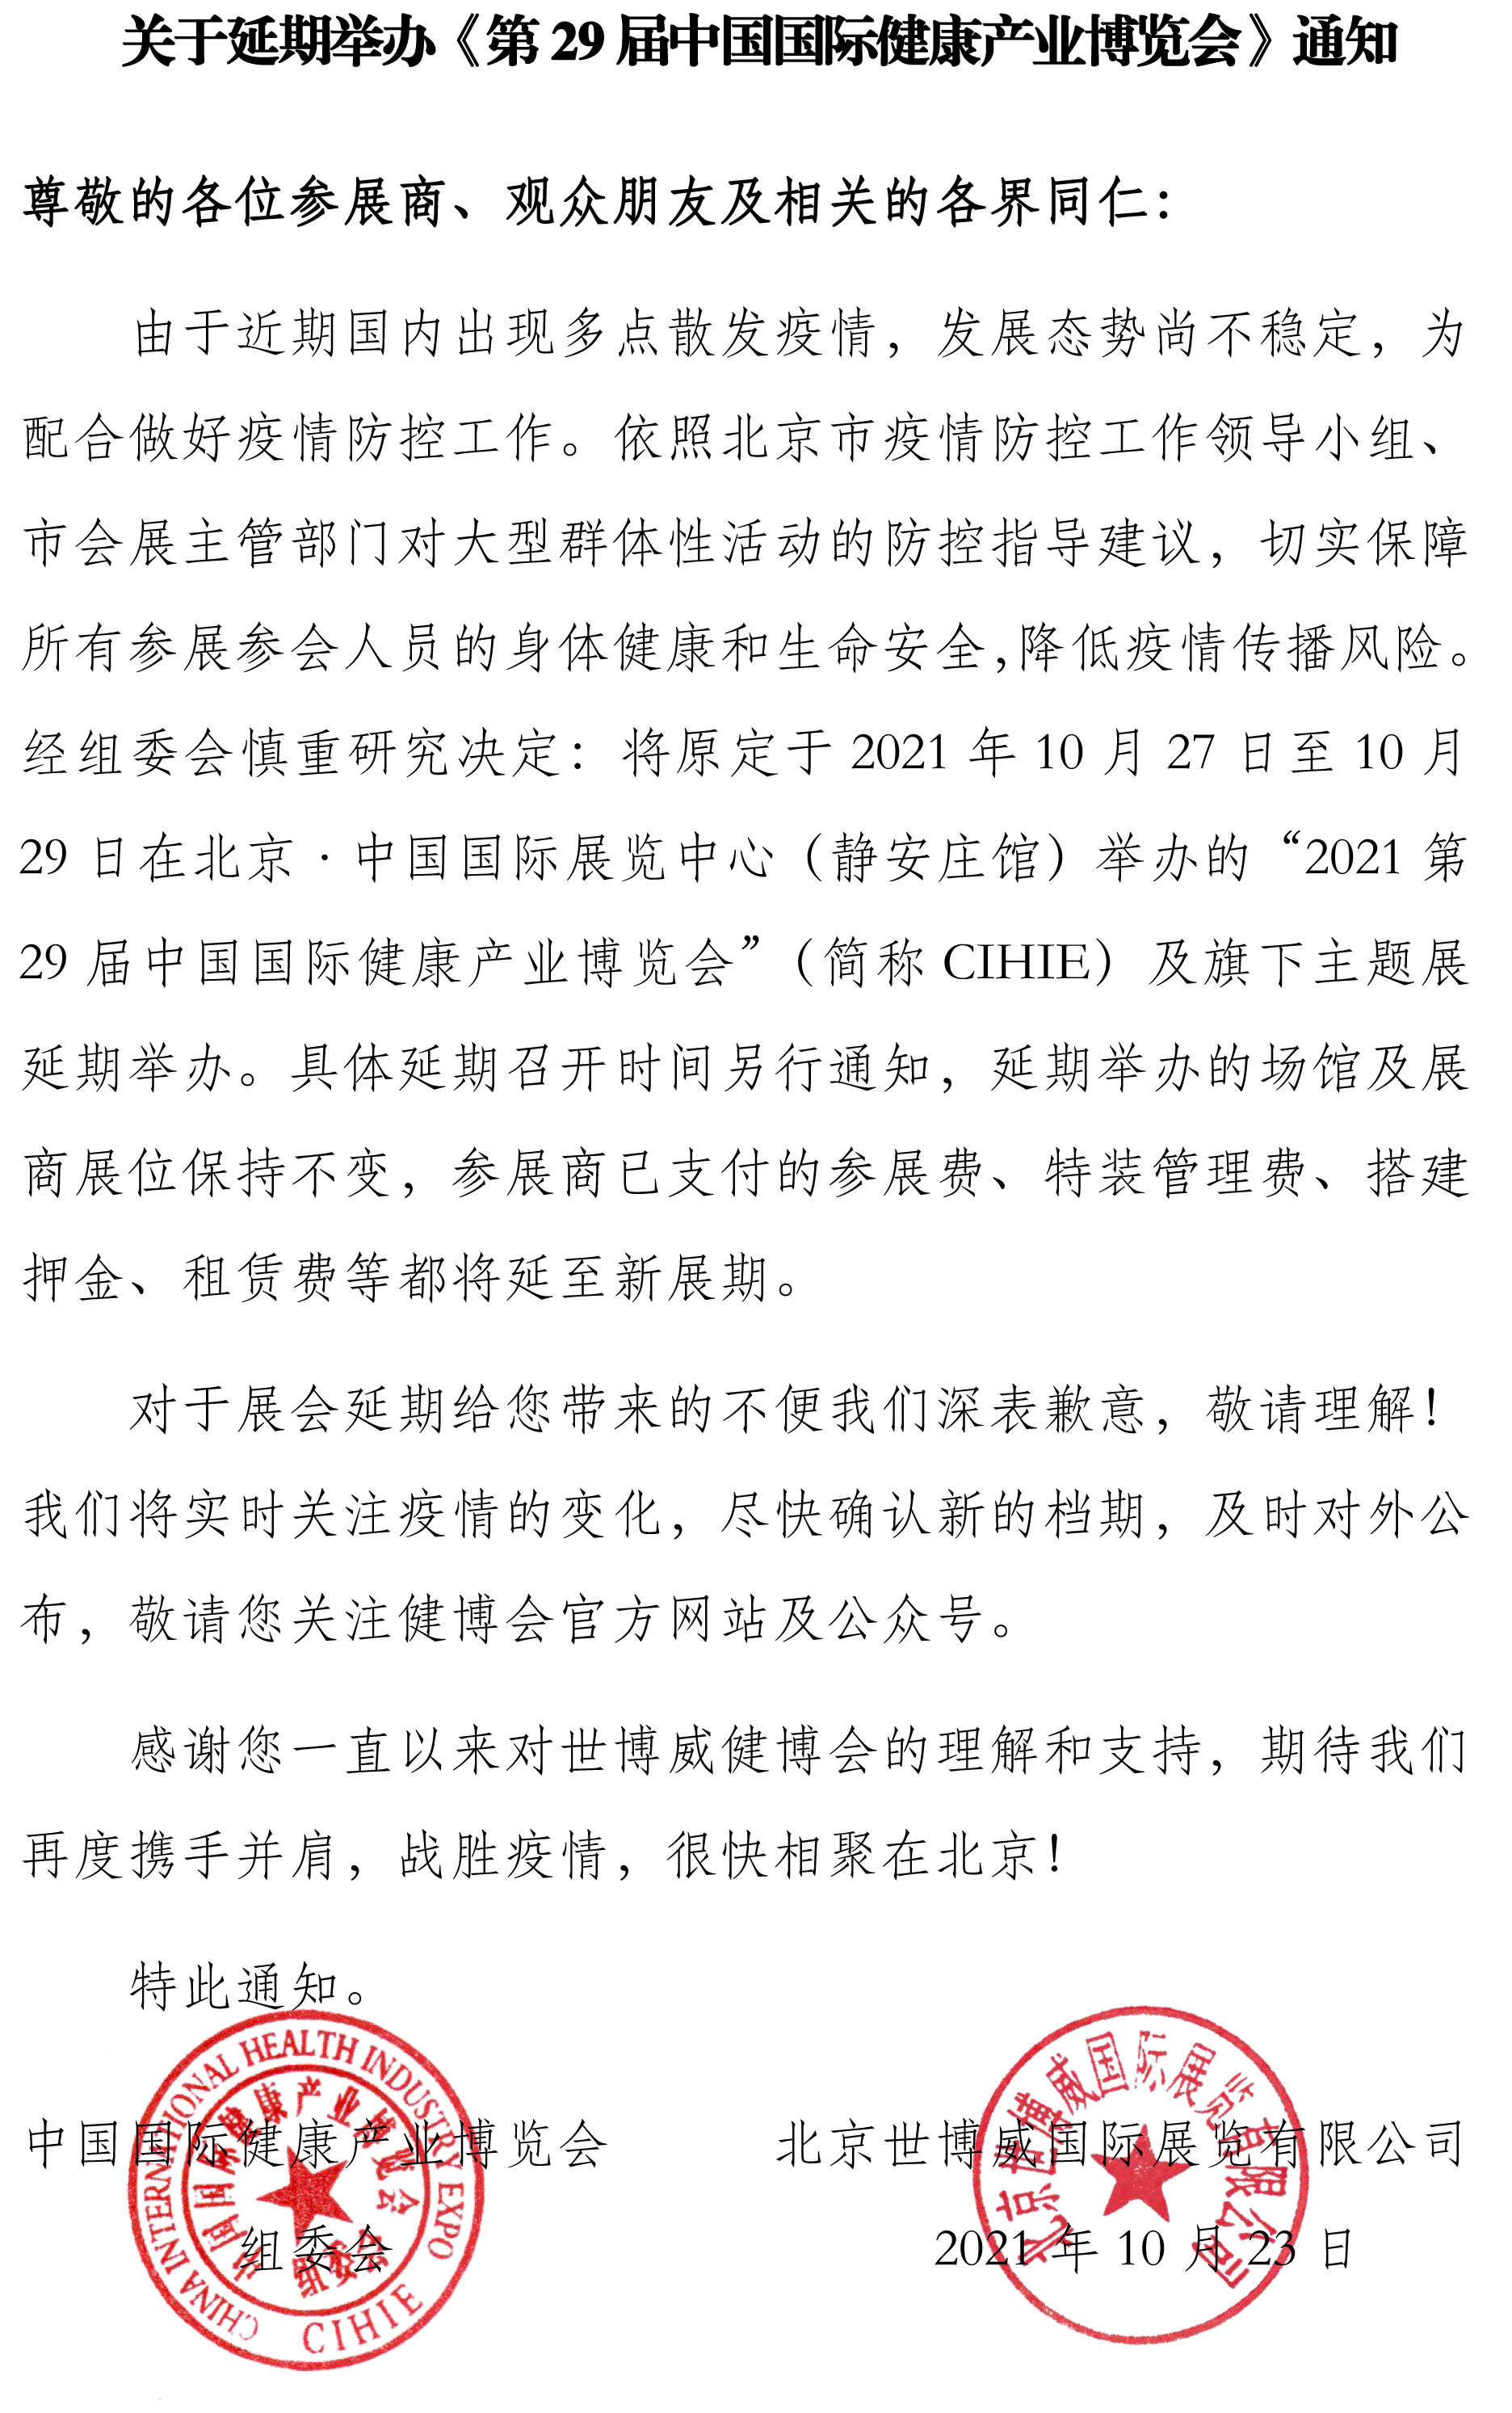 【<font color='red'>延期通知</font>】CIHIE 第29届中国国际健康产业博览会延期举办